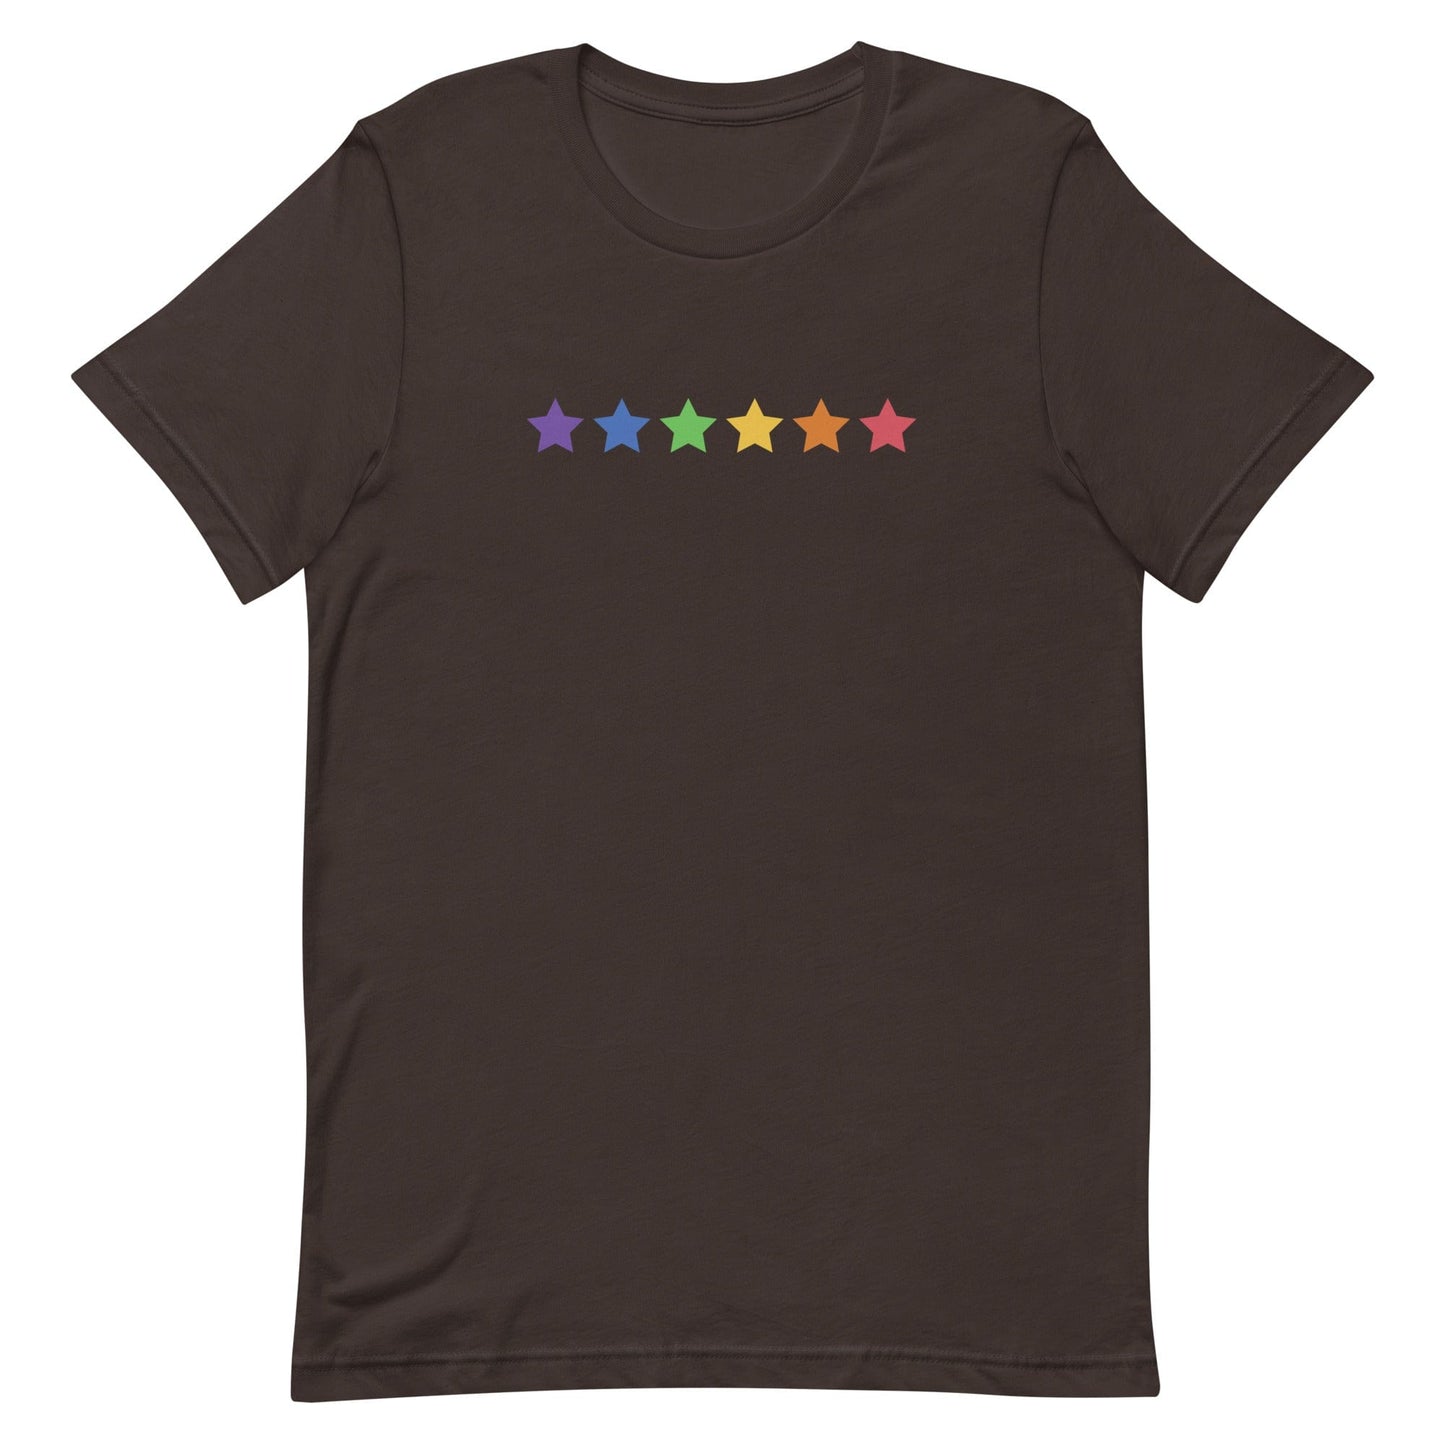 front-brown-genderless-stars-pride-t-shirt-by-feminist-define